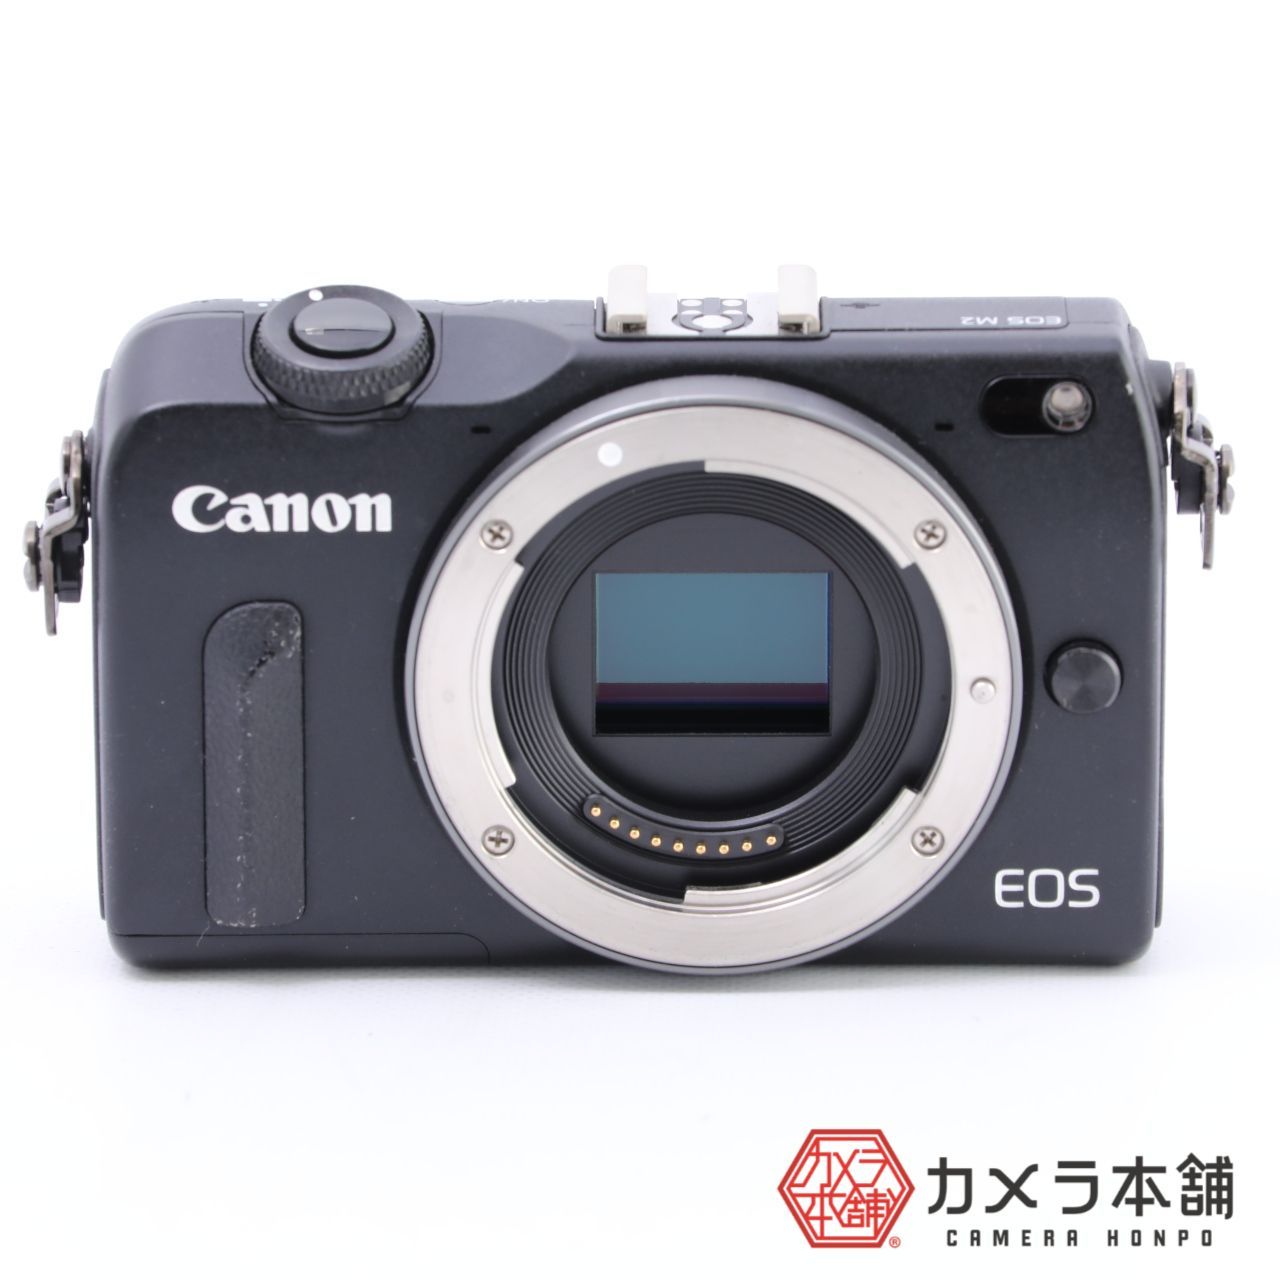 Canon ミラーレス一眼カメラ EOS M2 ボディ(ブラック) EOSM2BK-BODY ...